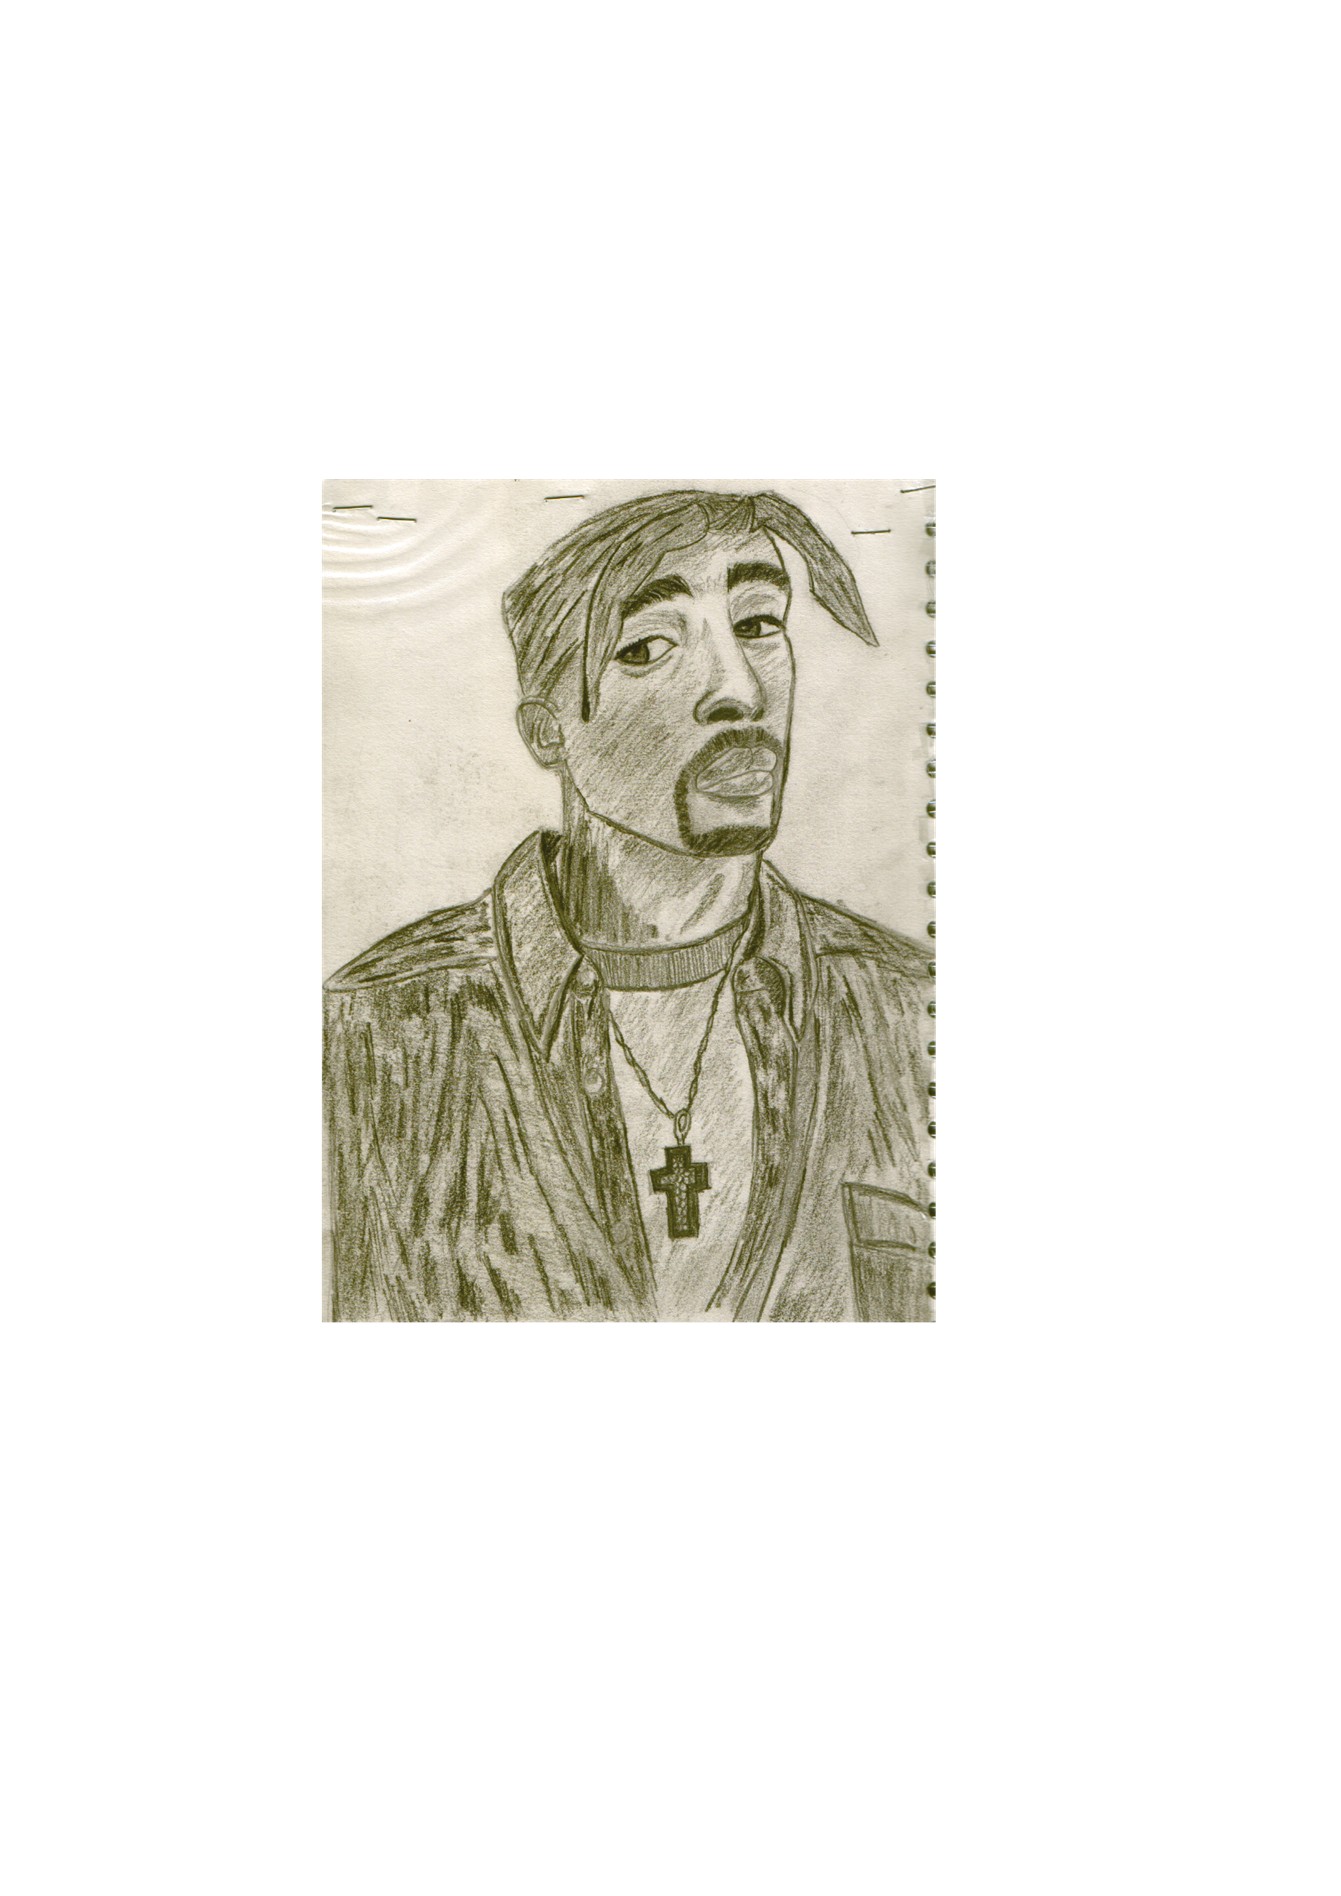 Tupac/2Pac Sketch by KB